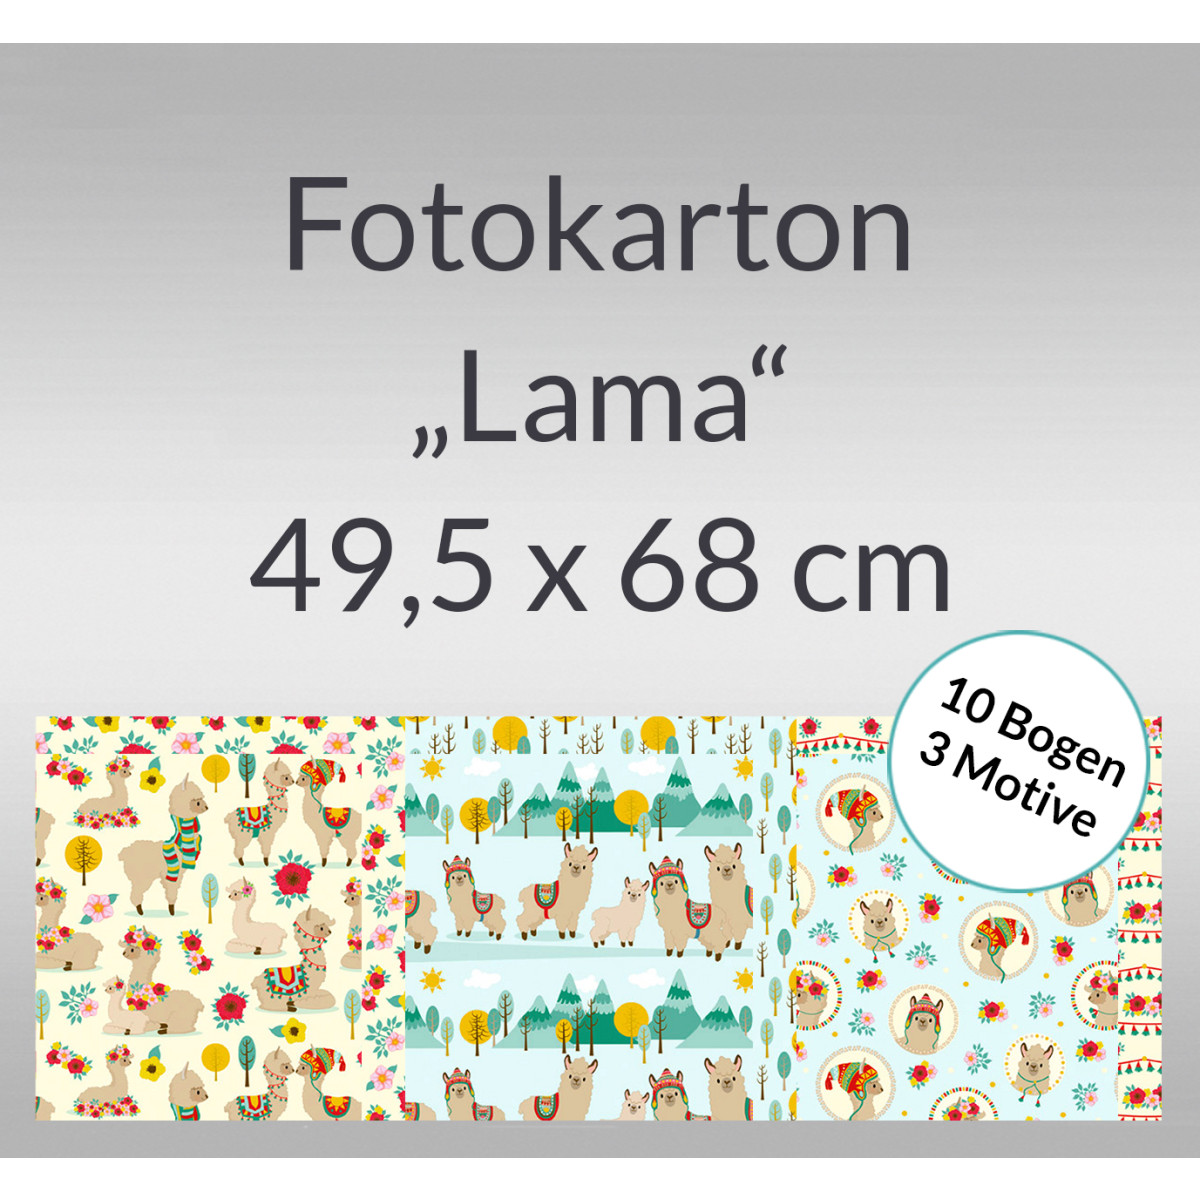 Fotokarton "Lama" 49,5 x 68 cm Motiv 03 - 10 Bogen sortiert